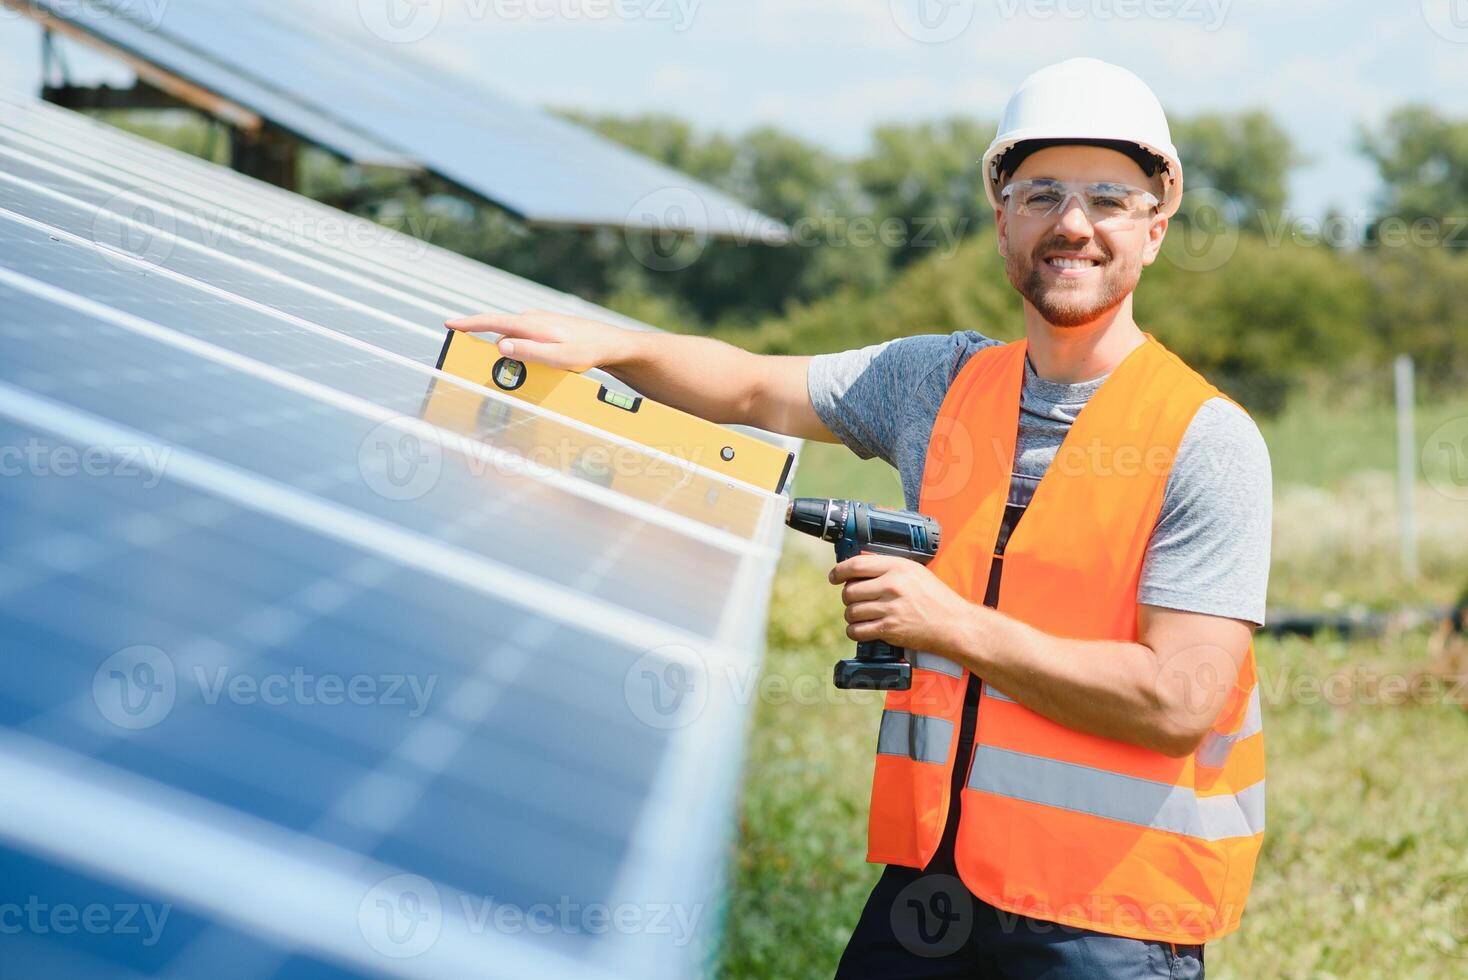 arbetstagare montera sol- paneler utomhus foto